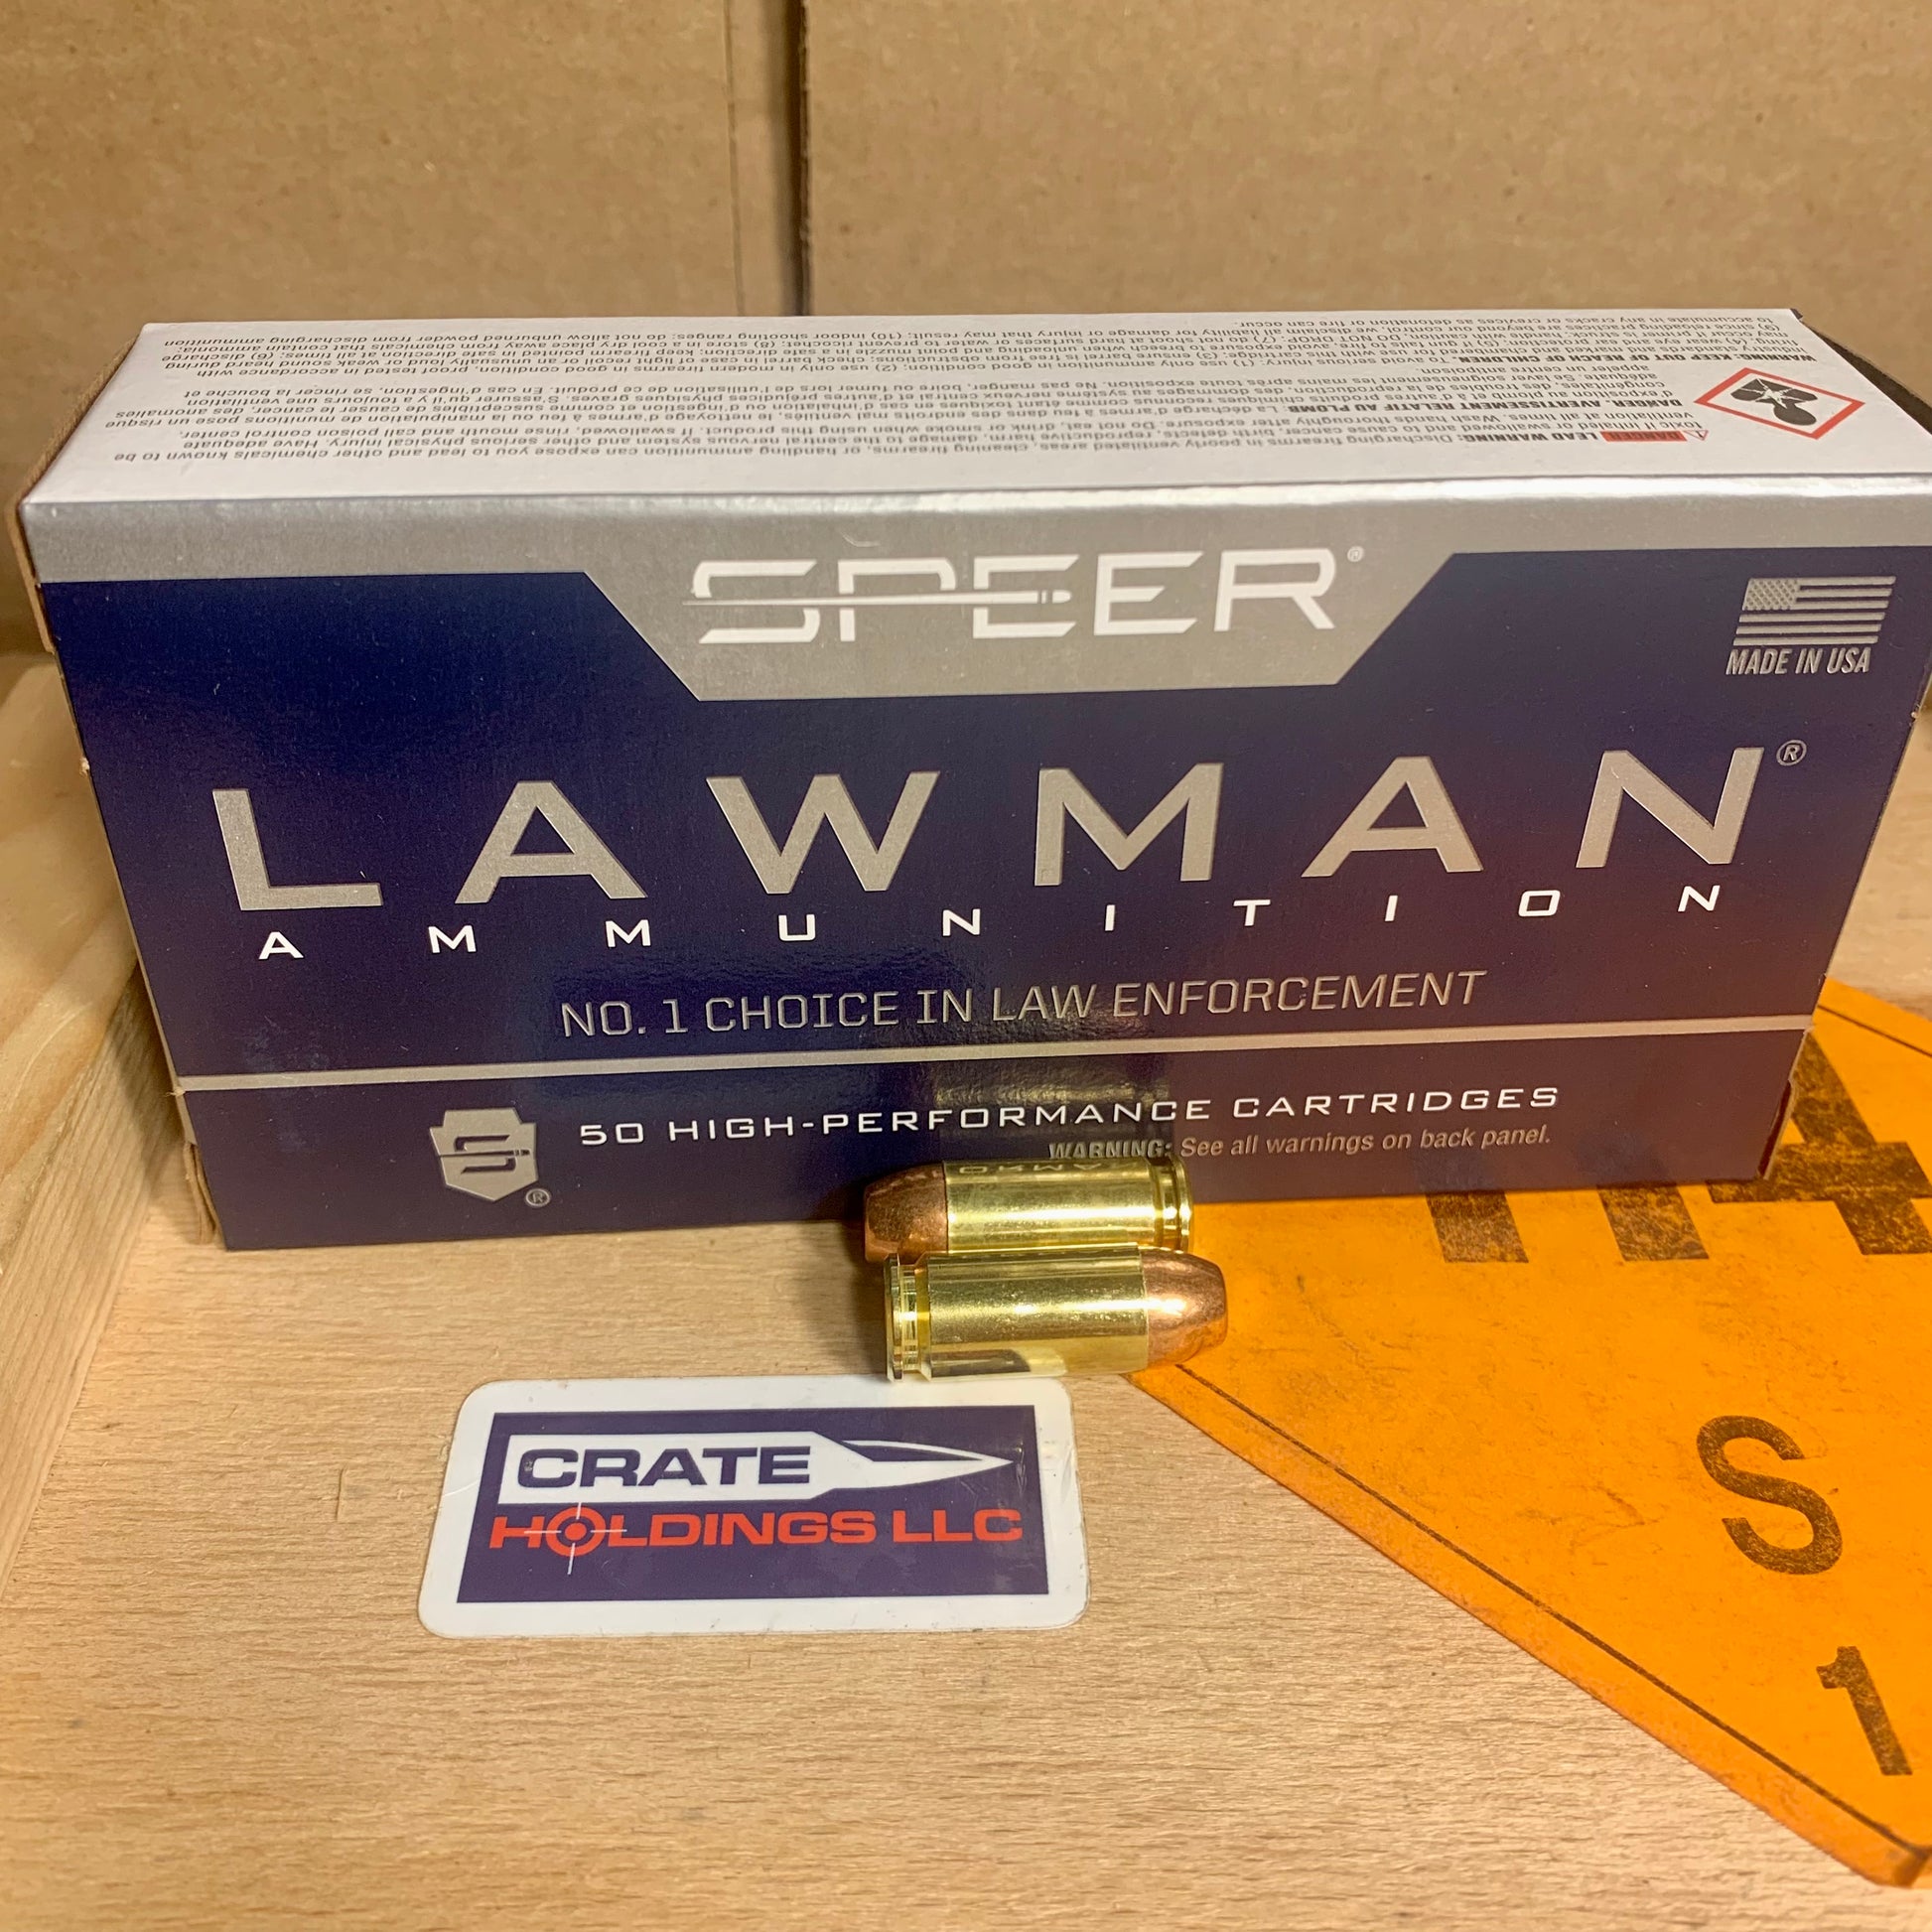 50 Count Box Speer Lawman .40 S&W Ammo 180gr FMJ FN - 53652